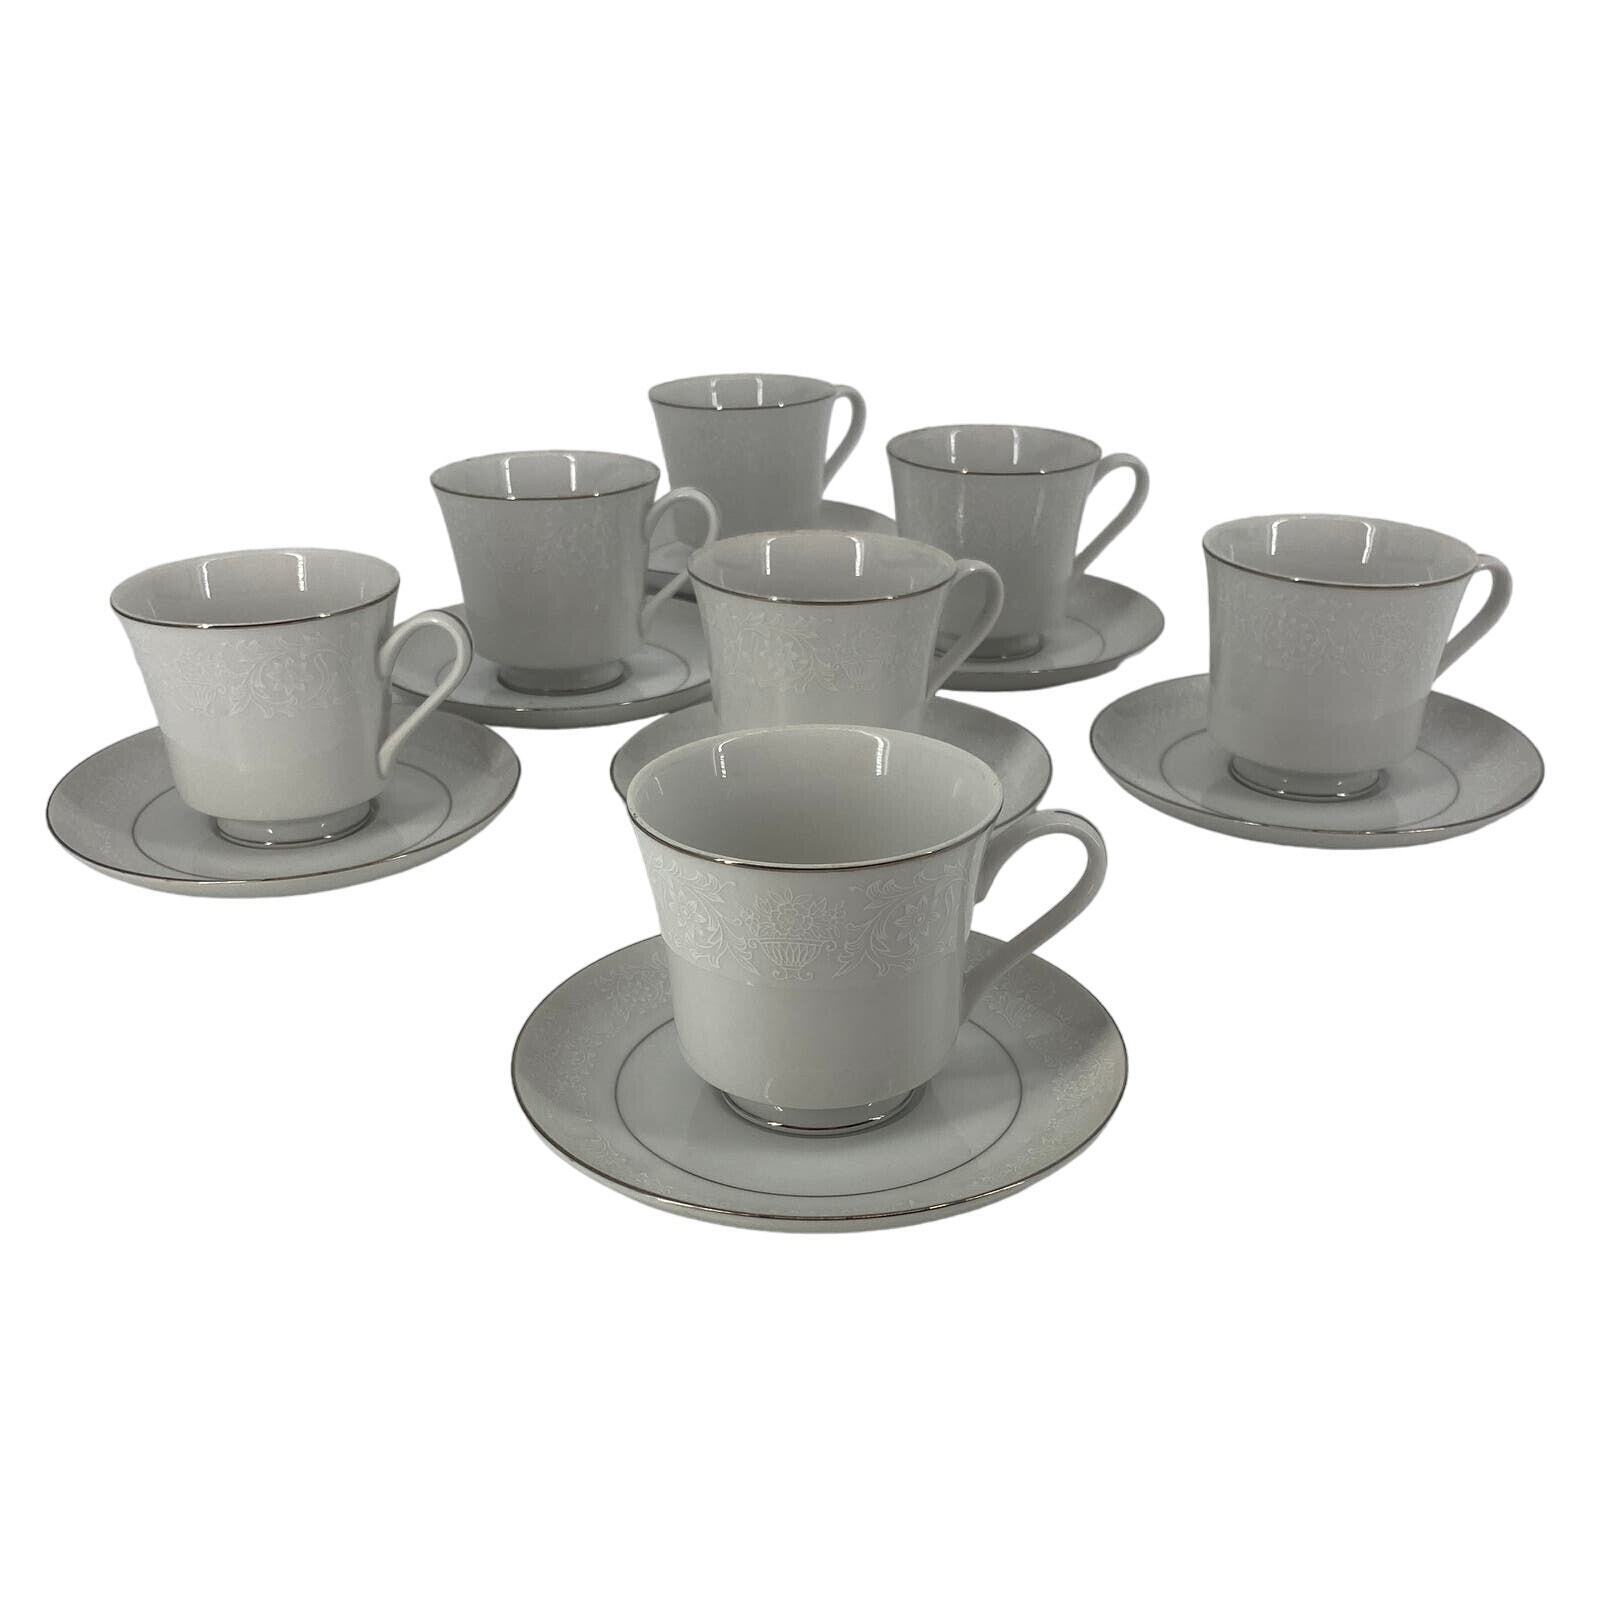 Set 7 -14 piece Crown Victoria Lovelace Tea Coffee Cups & Saucers white platinum